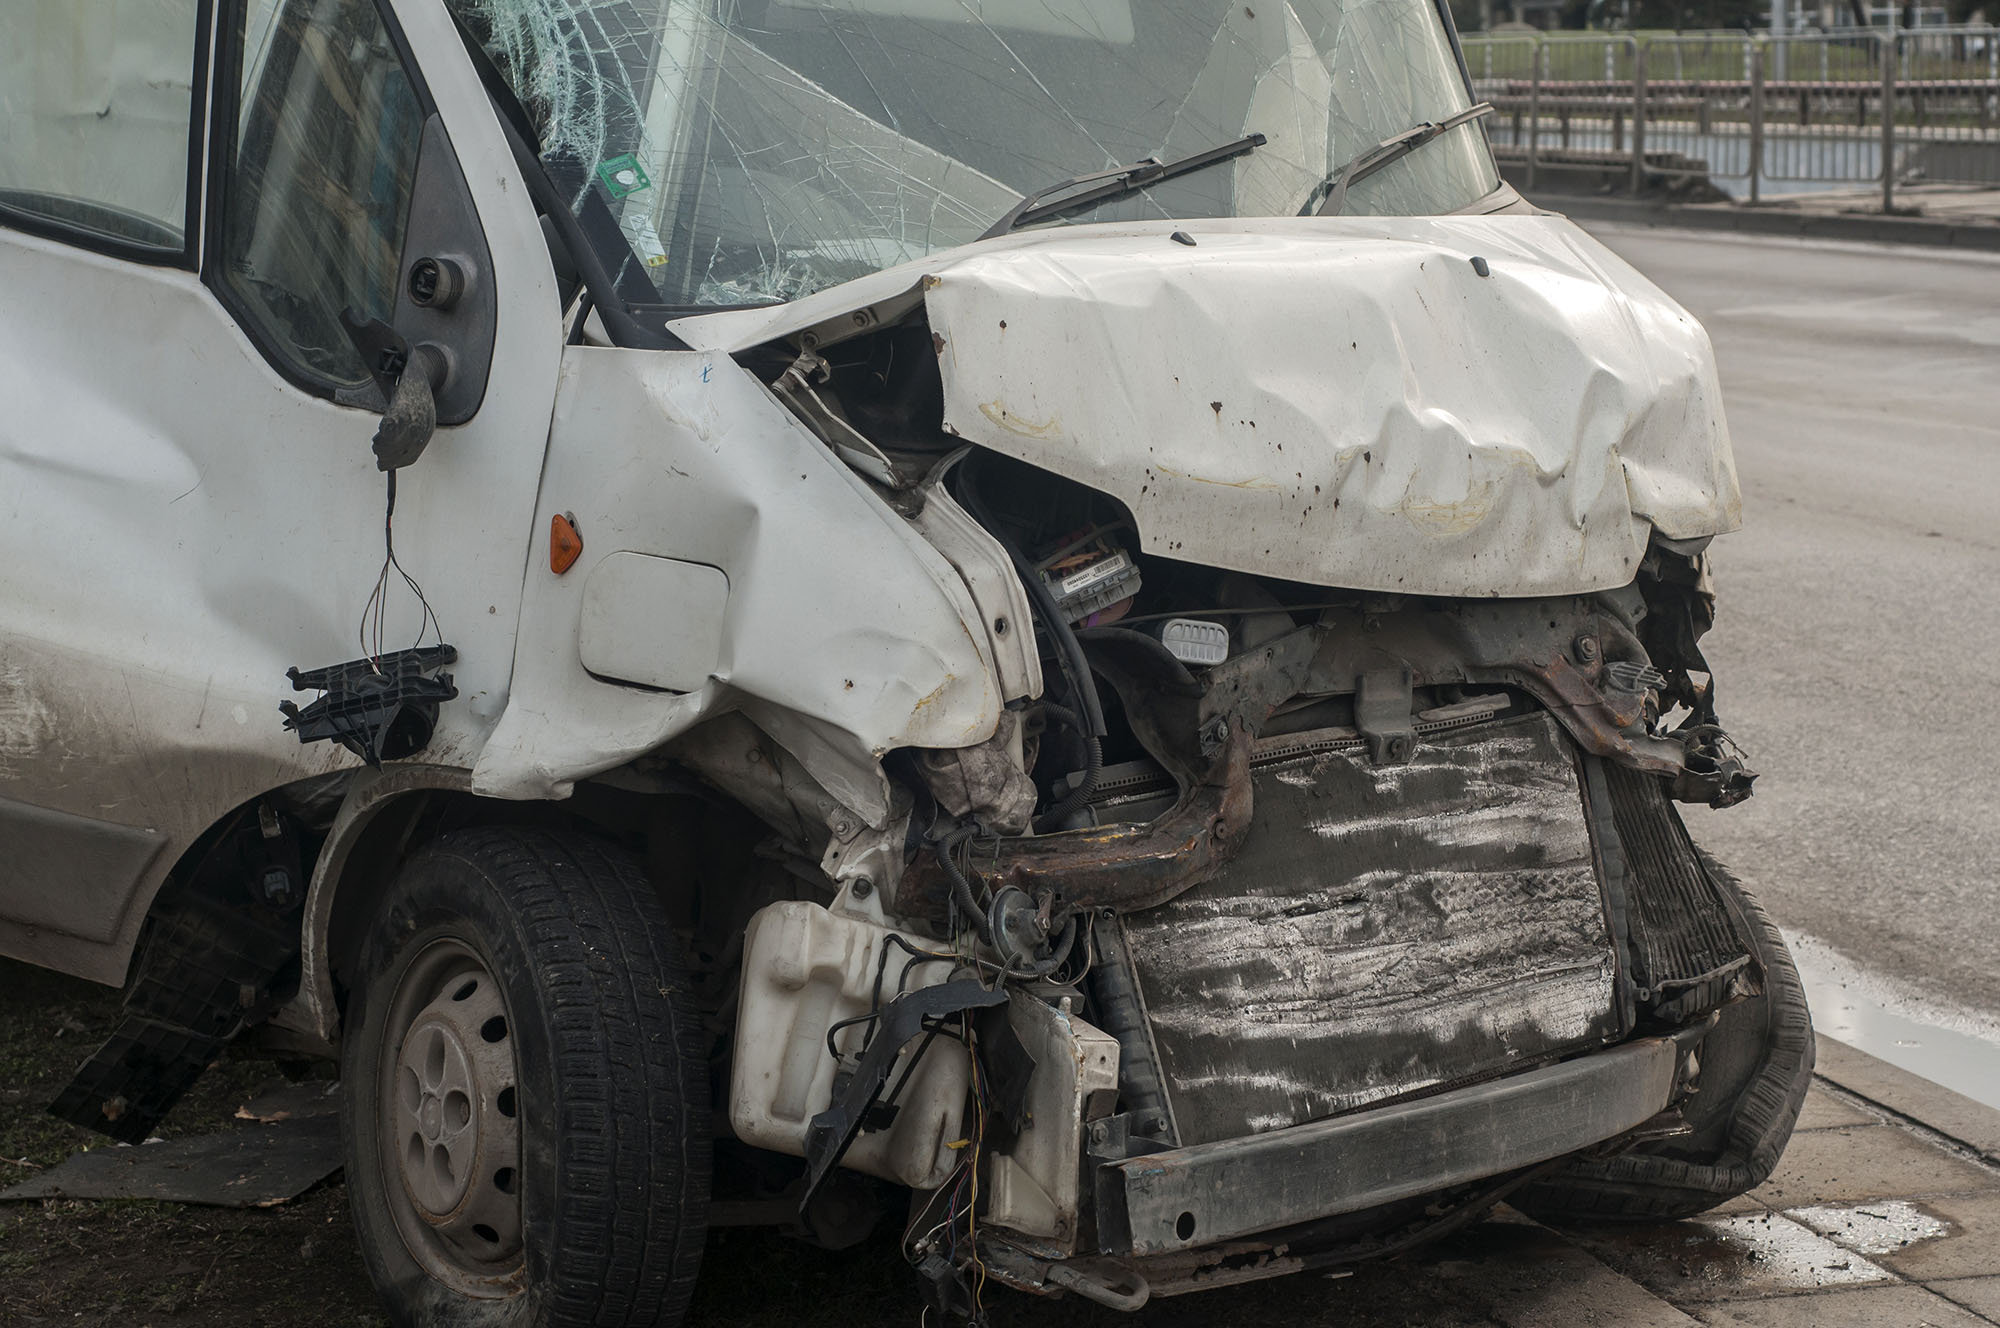 van accident crash injury compensation solicitors Aberdeen